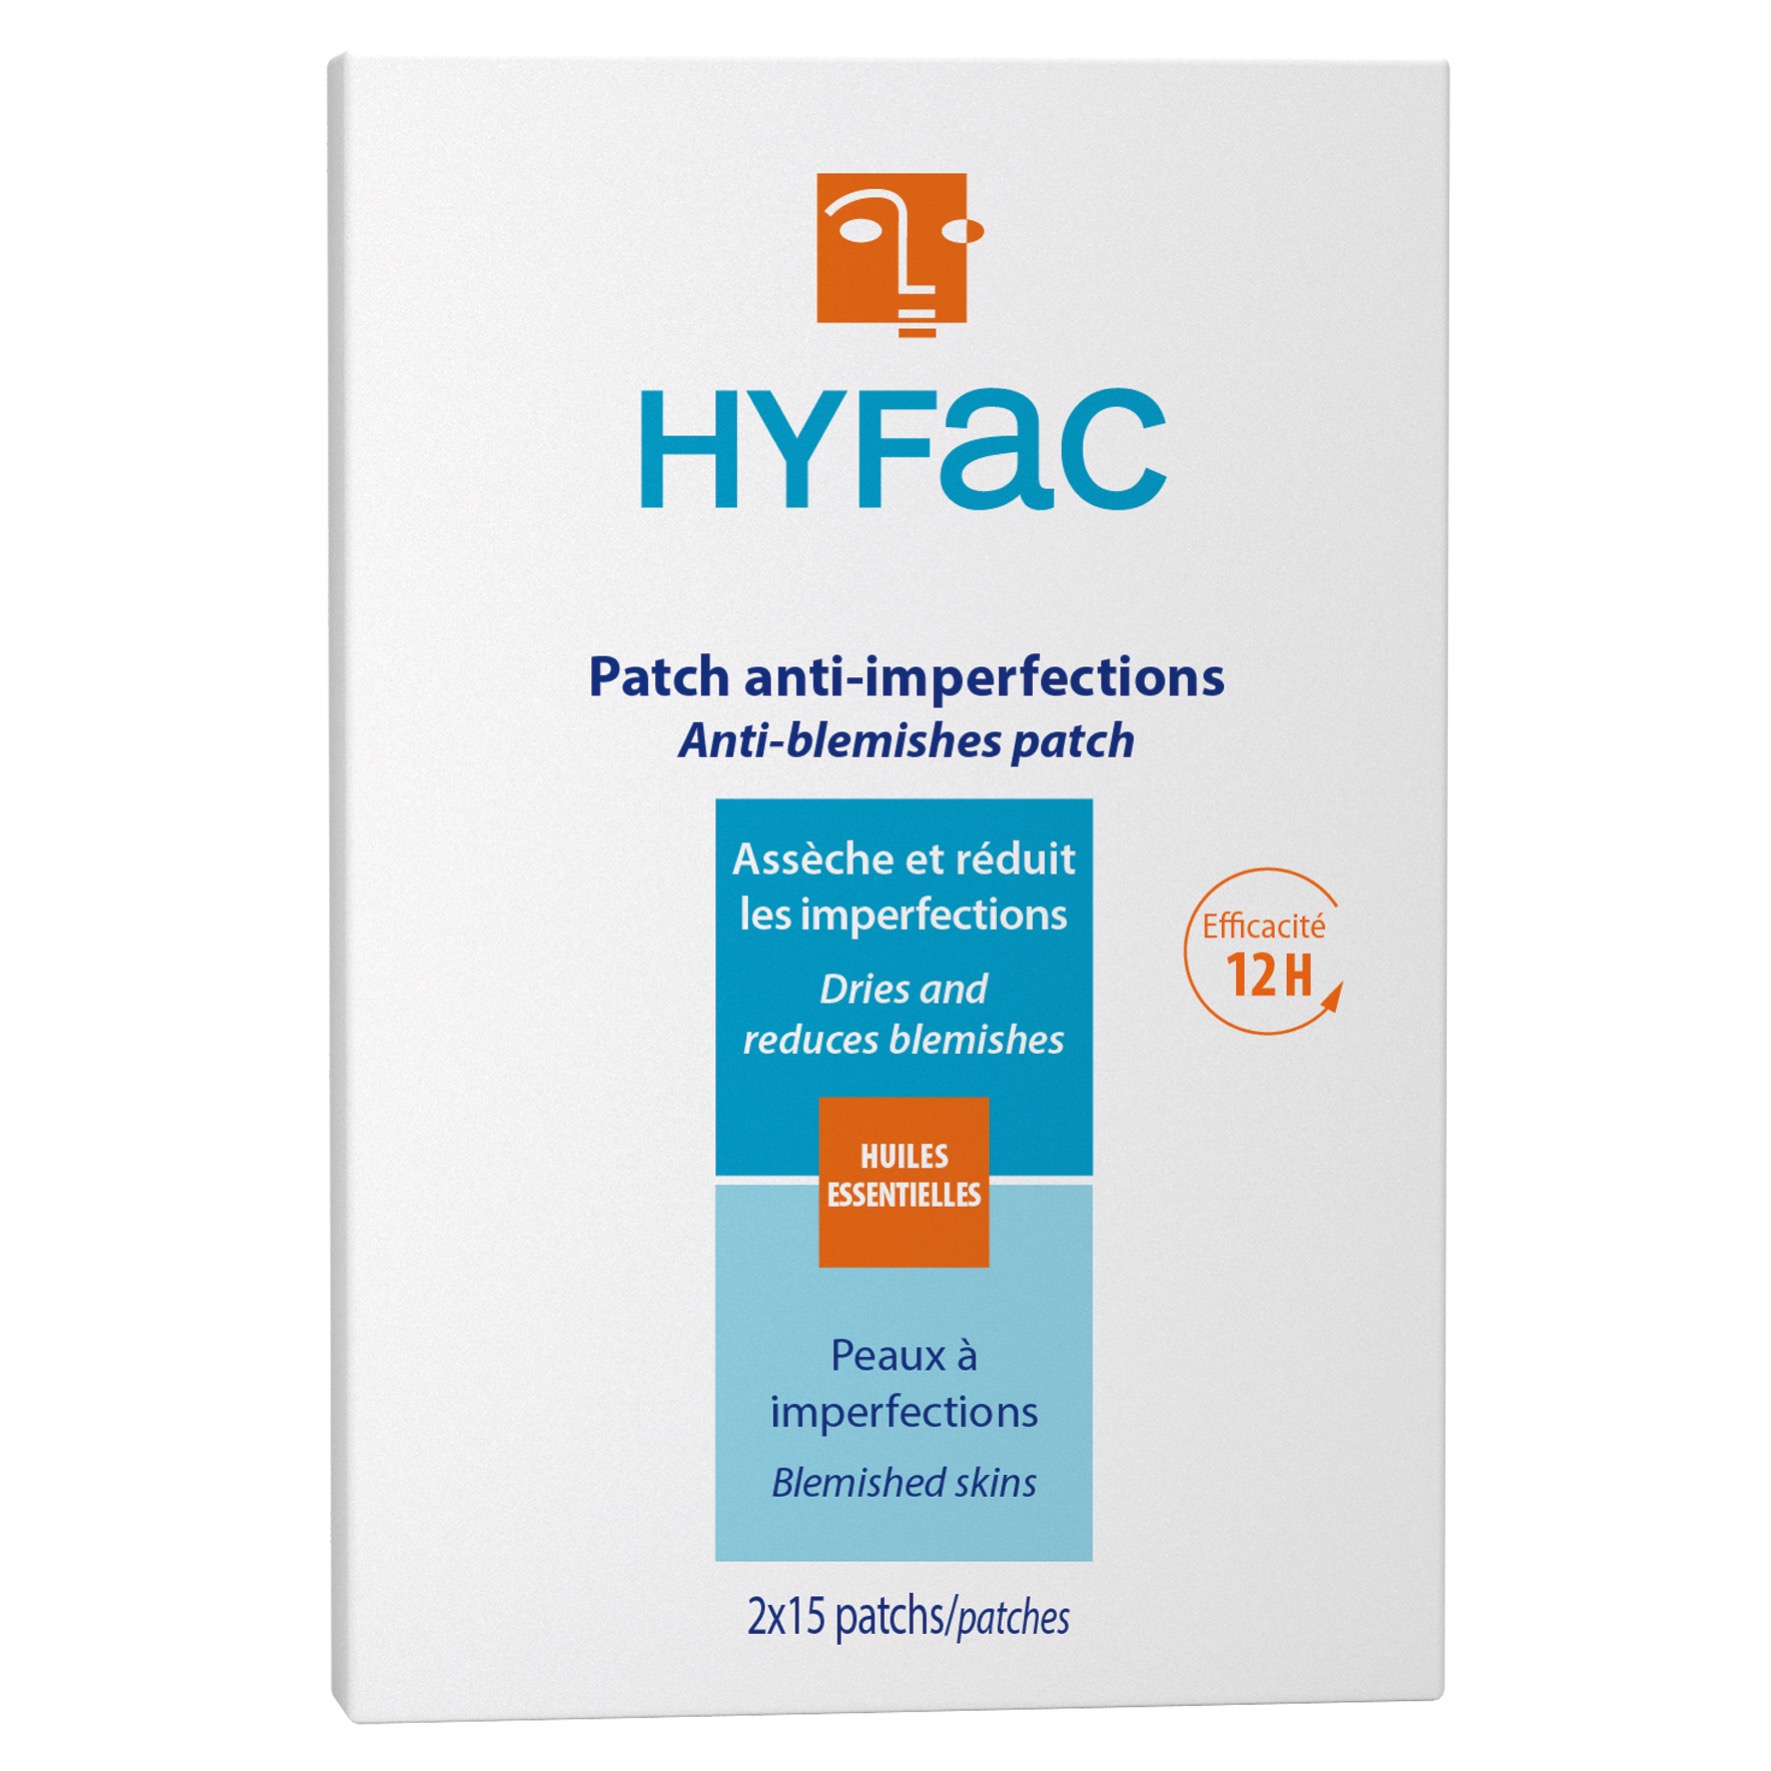 HYFAC Анти-Имперфекция Патч сушит прыщи